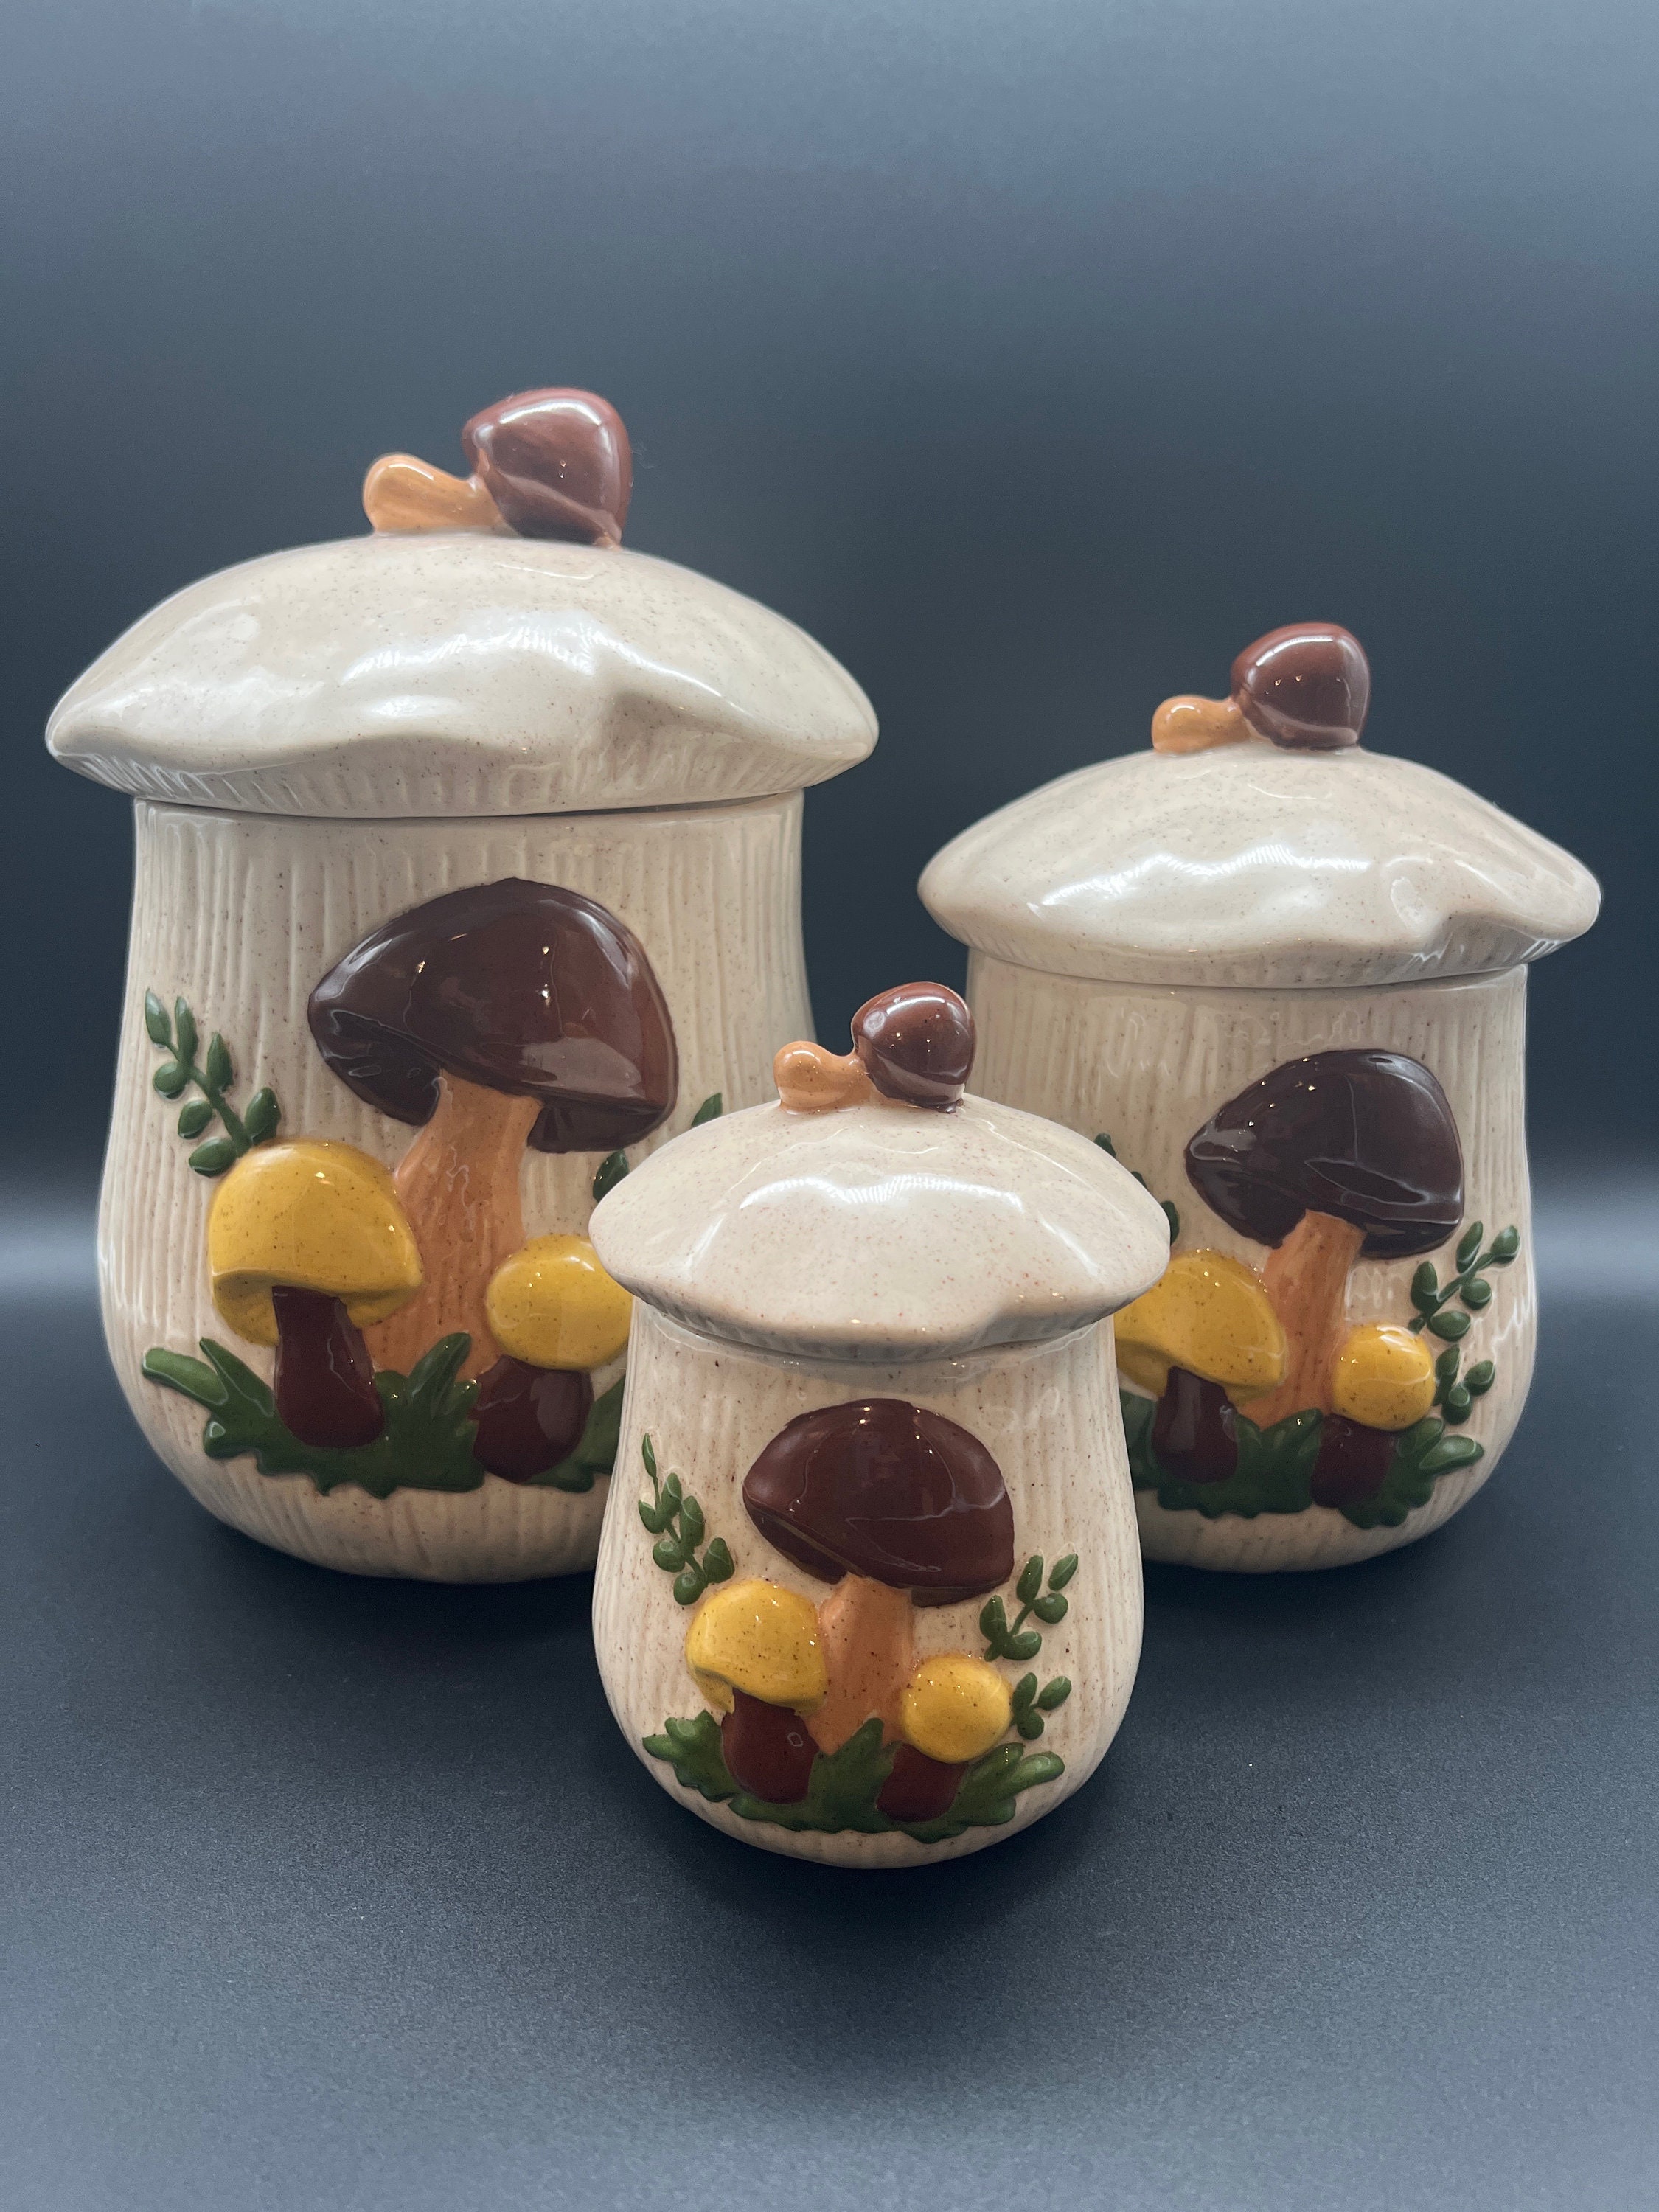 Vintage MCM Brown Mushroom Top Ceramic Flour Canister by Holiday Desig –  The Cupboard Shop NJ